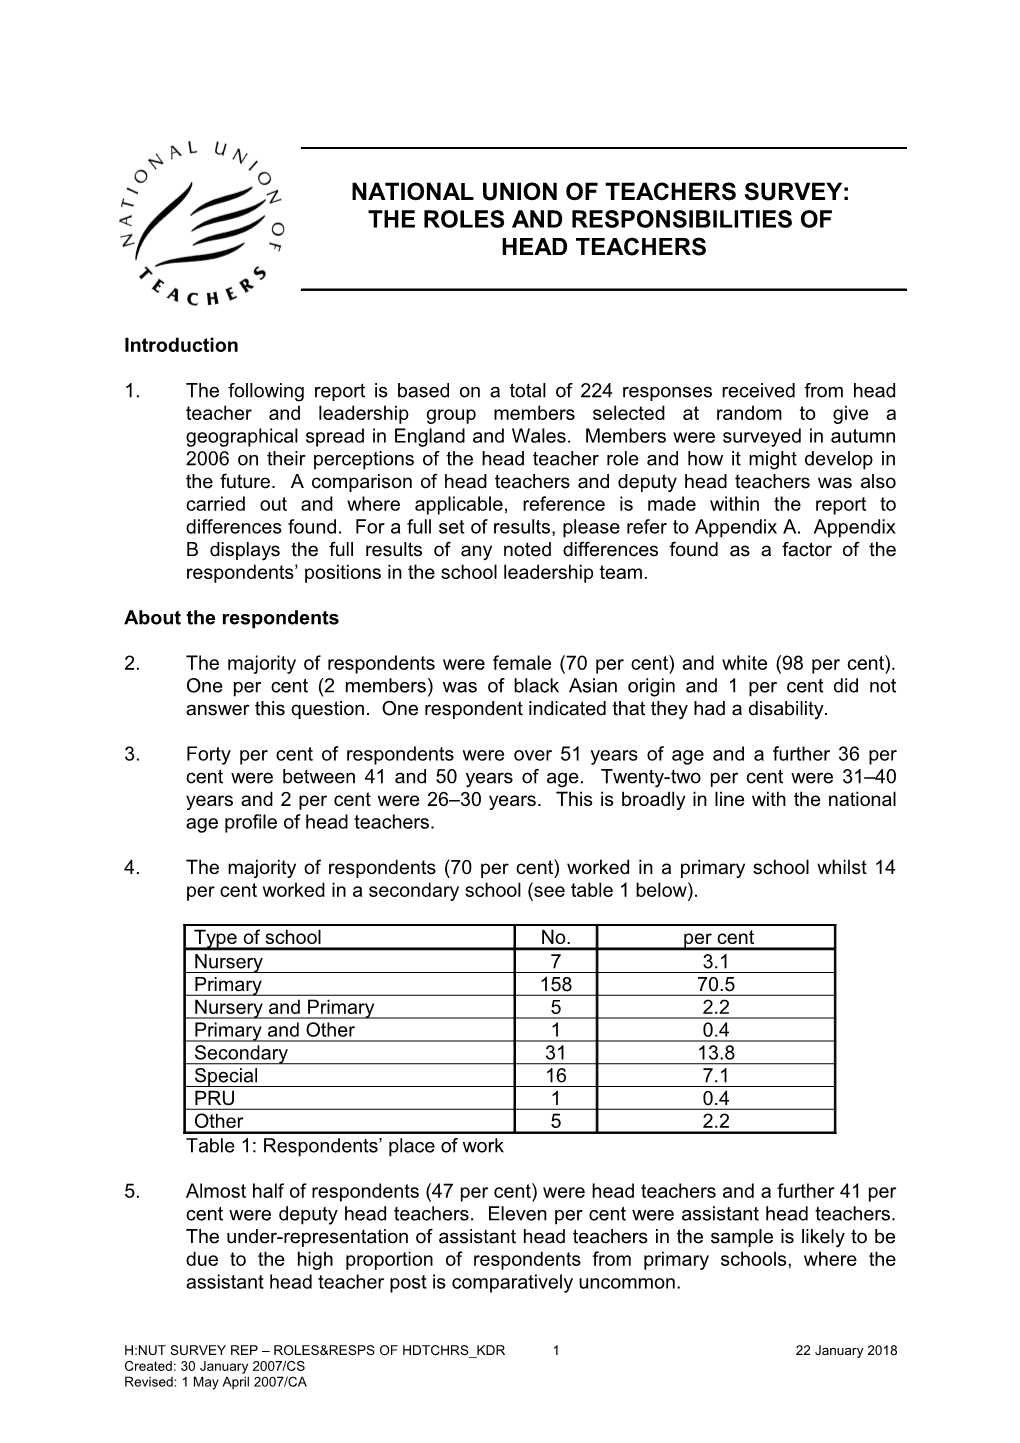 National Union of Teachers Survey